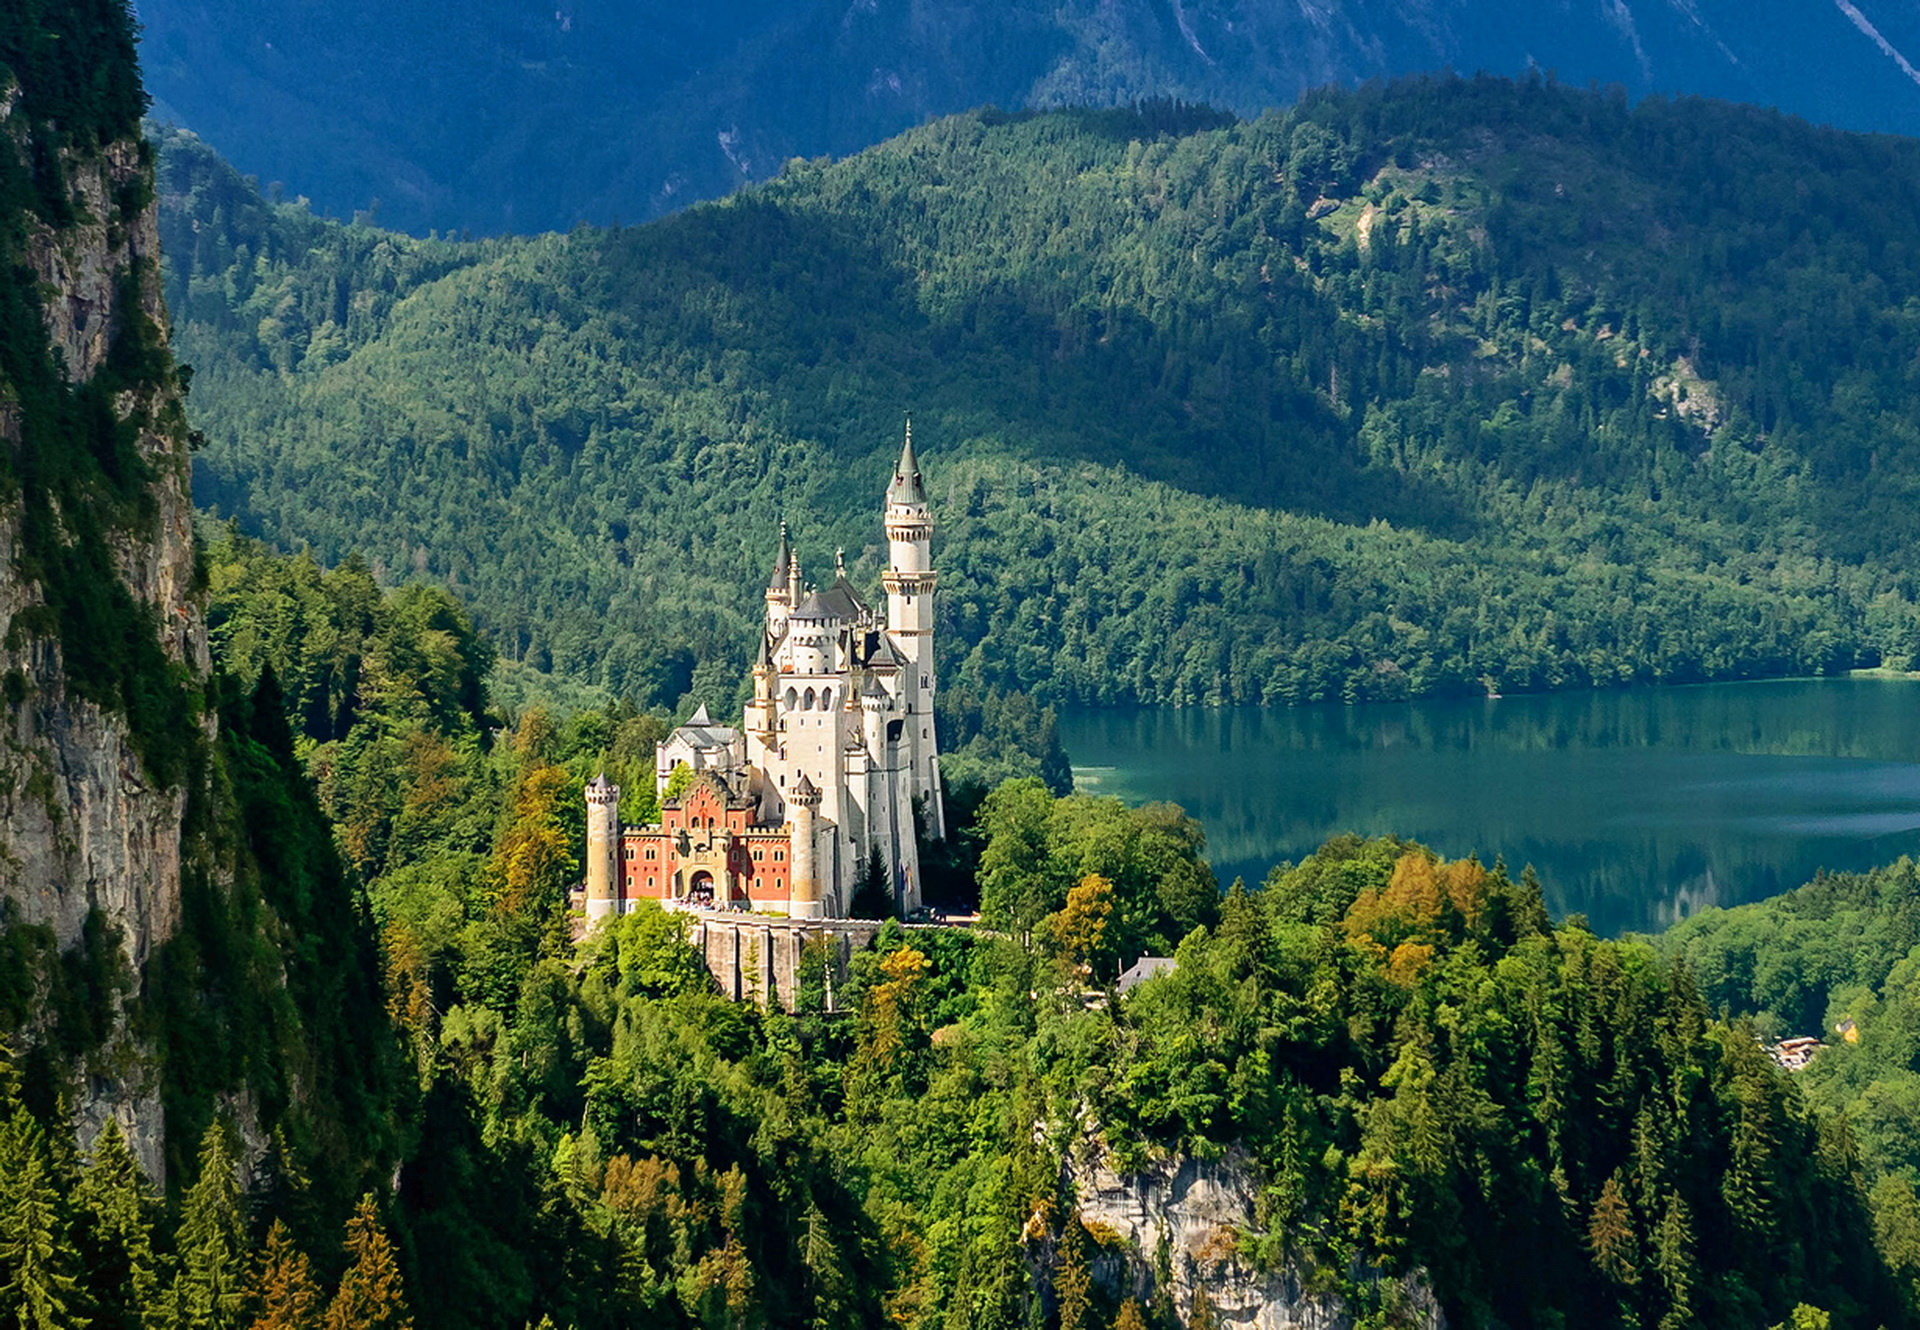 Город около гор. Замок Нойшванштайн Бавария Германия озеро. Замки Баварии Нойшванштайн и Линдерхоф. Нойшванштайн Шванзее. Самый красивый замок в Германии Нойшванштайн.